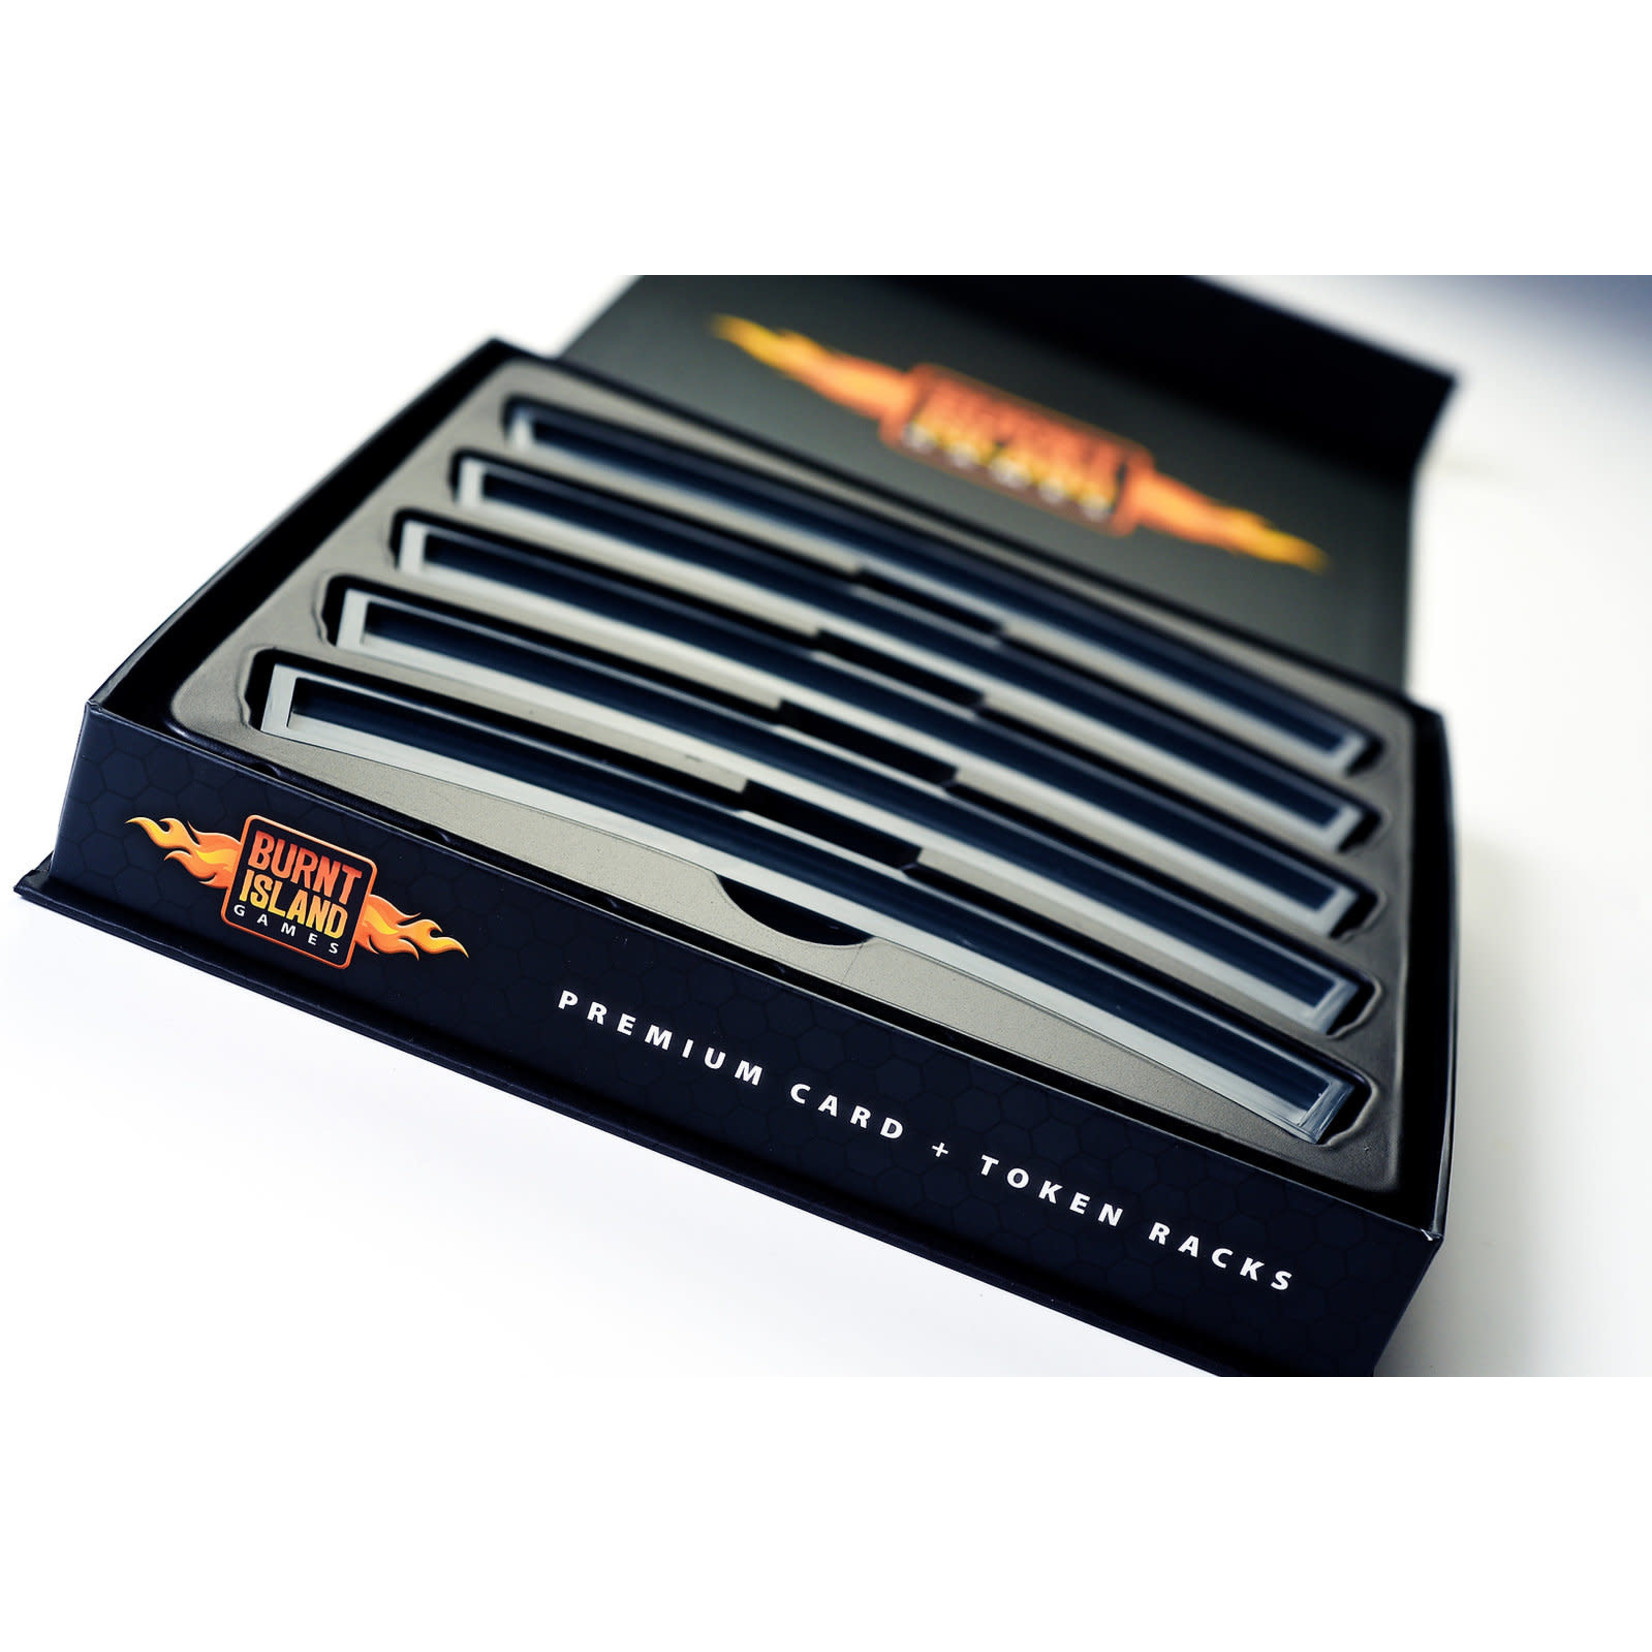 Burnt Island Games & Grand Gamers Guild Premium Card + Token Racks